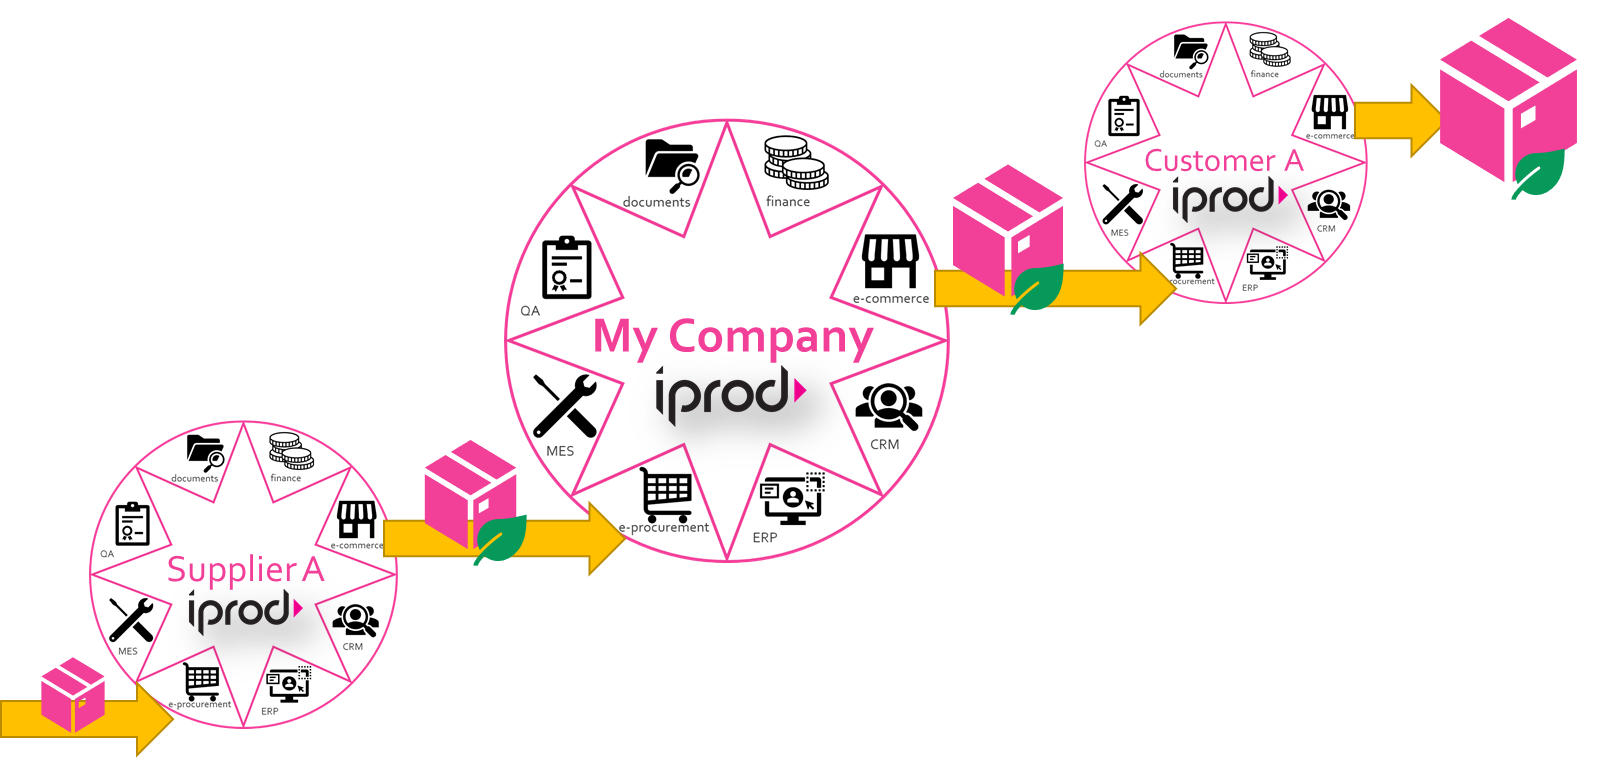 iProd Supply chain